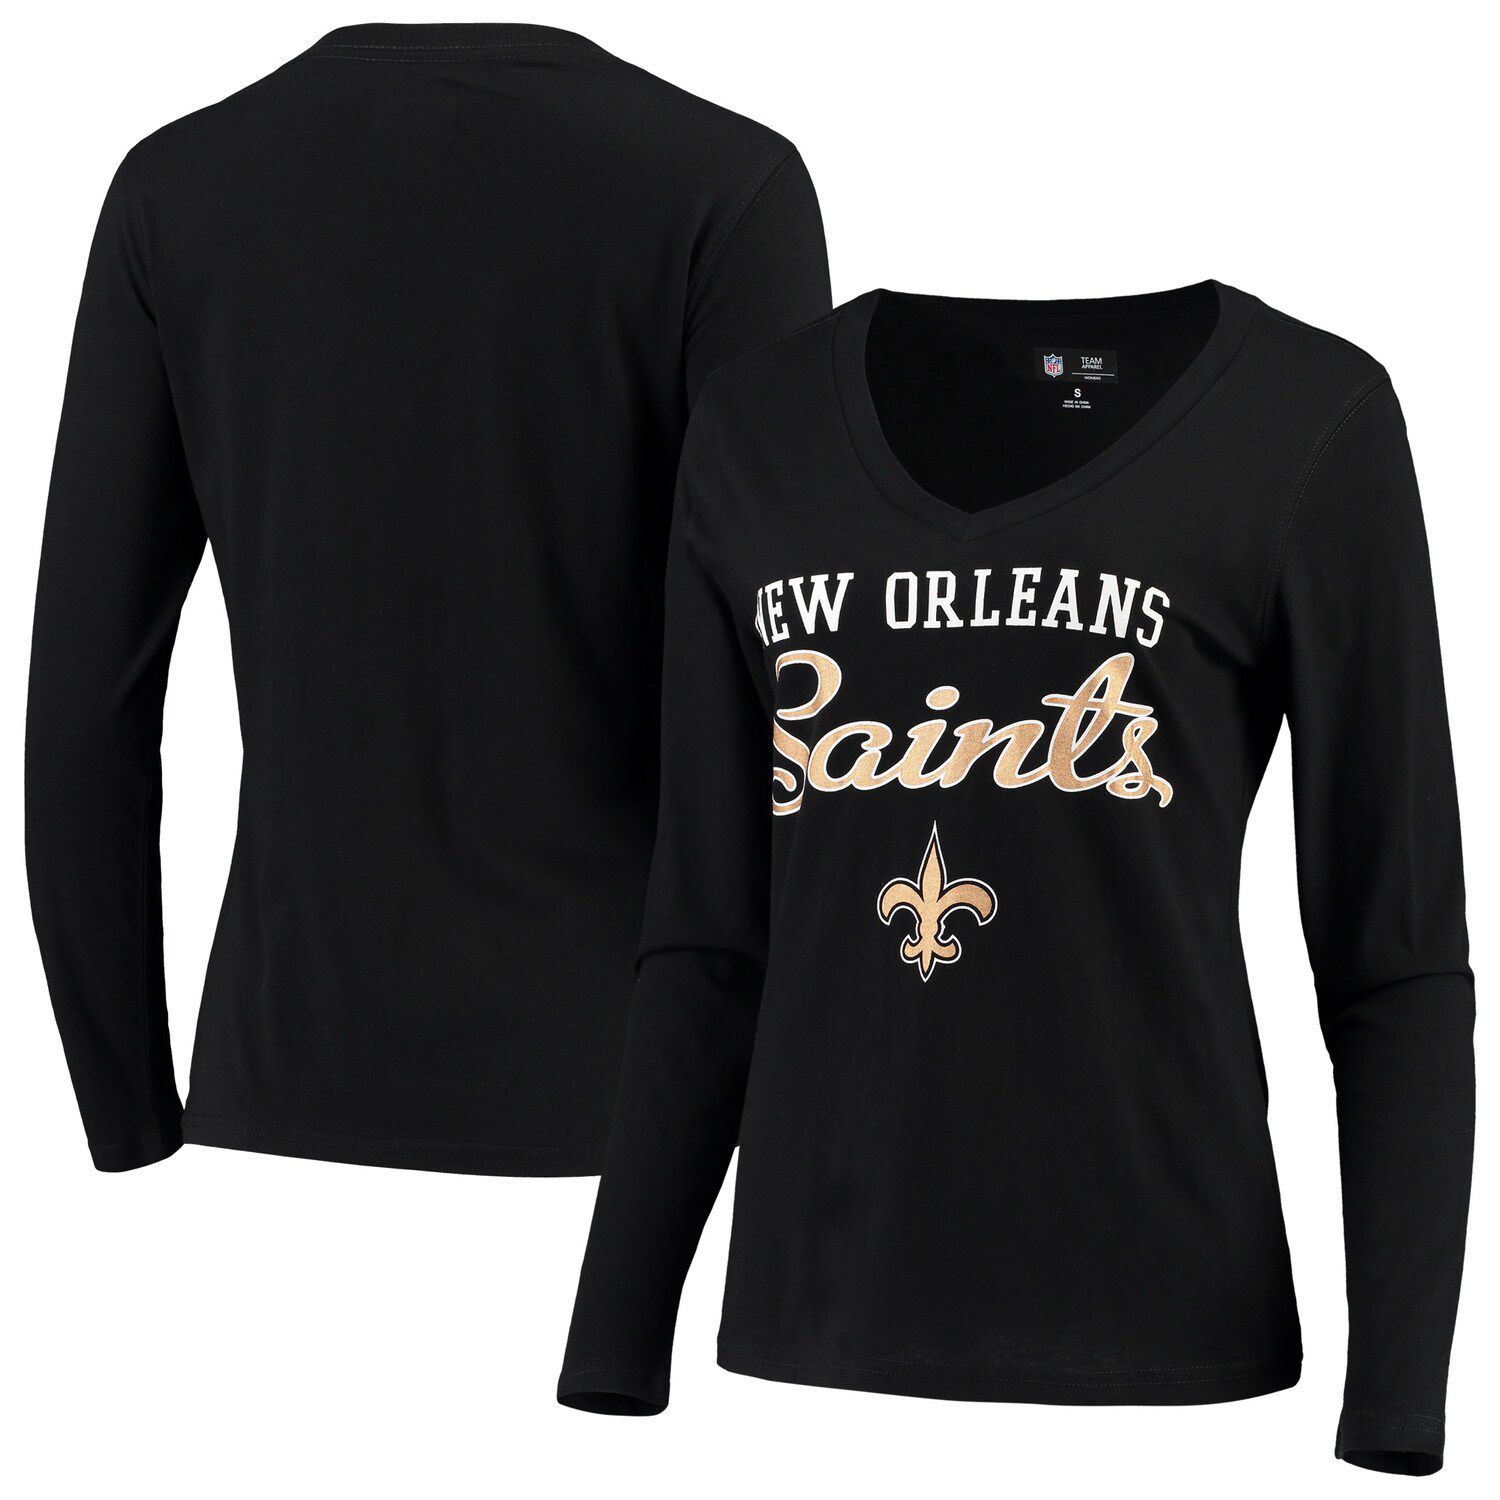 new orleans saints women's long sleeve shirt